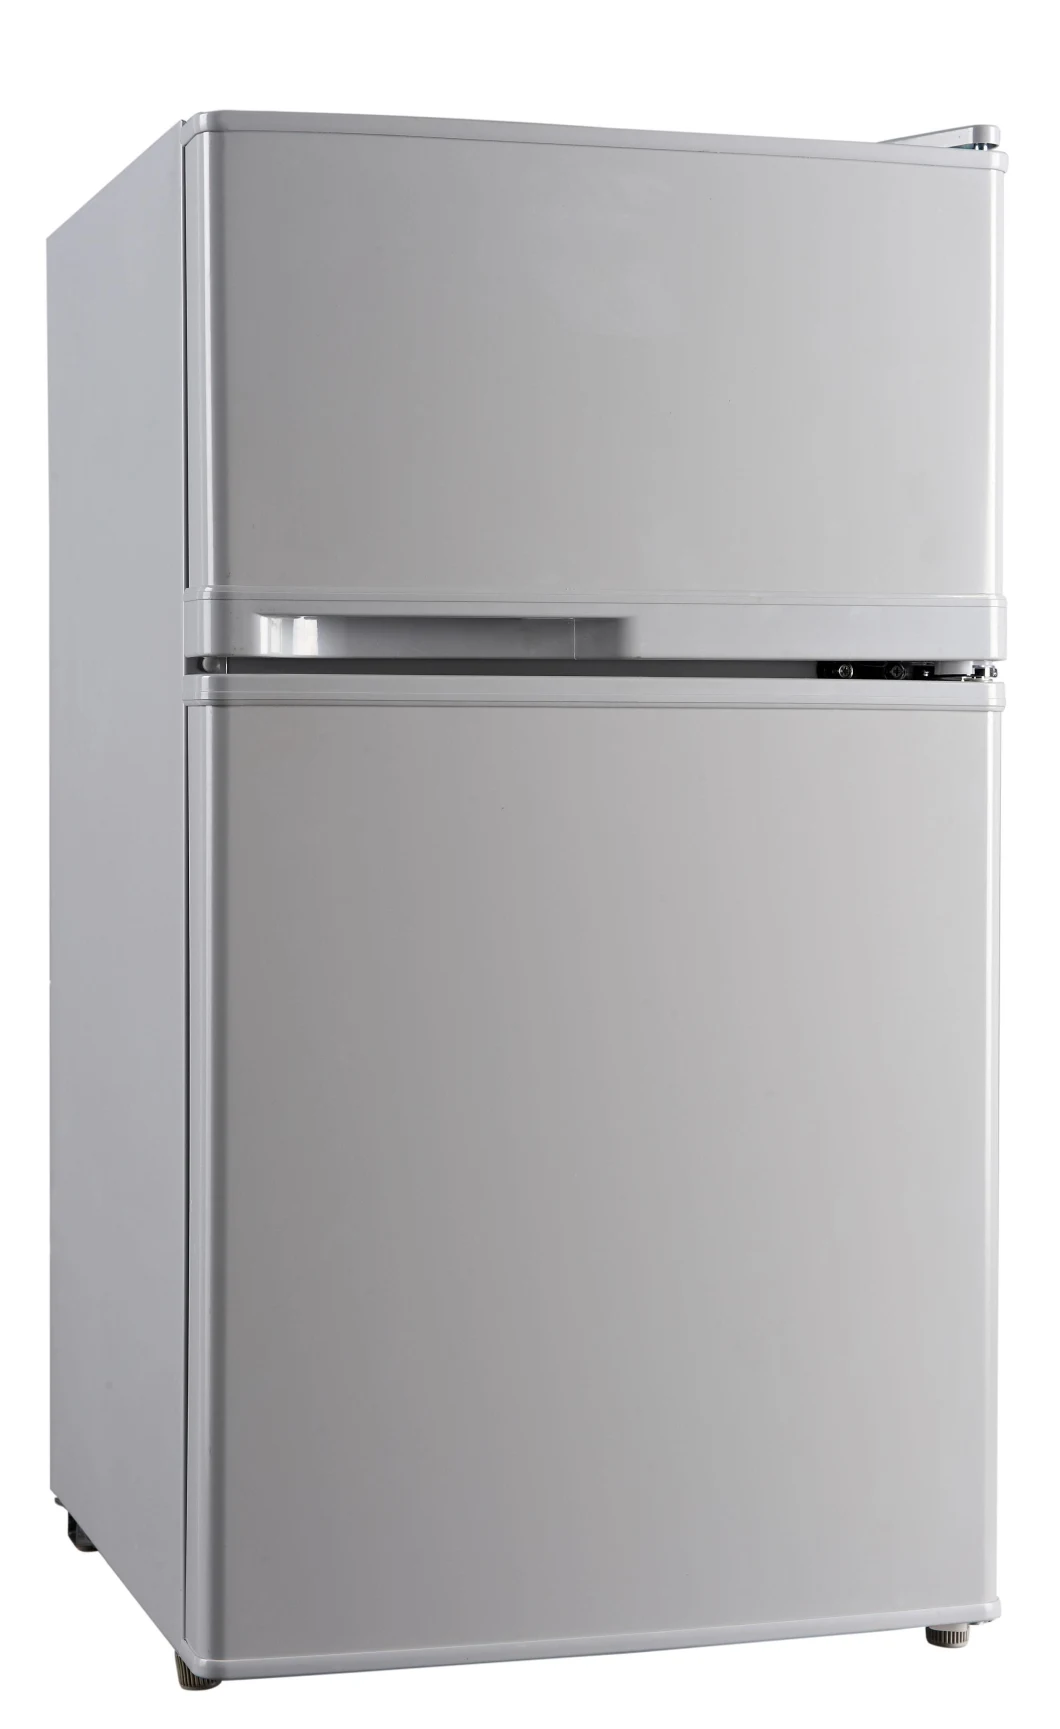 80L Small Double Door Top Mounted Refrigerator Home Fridge Refrigerator